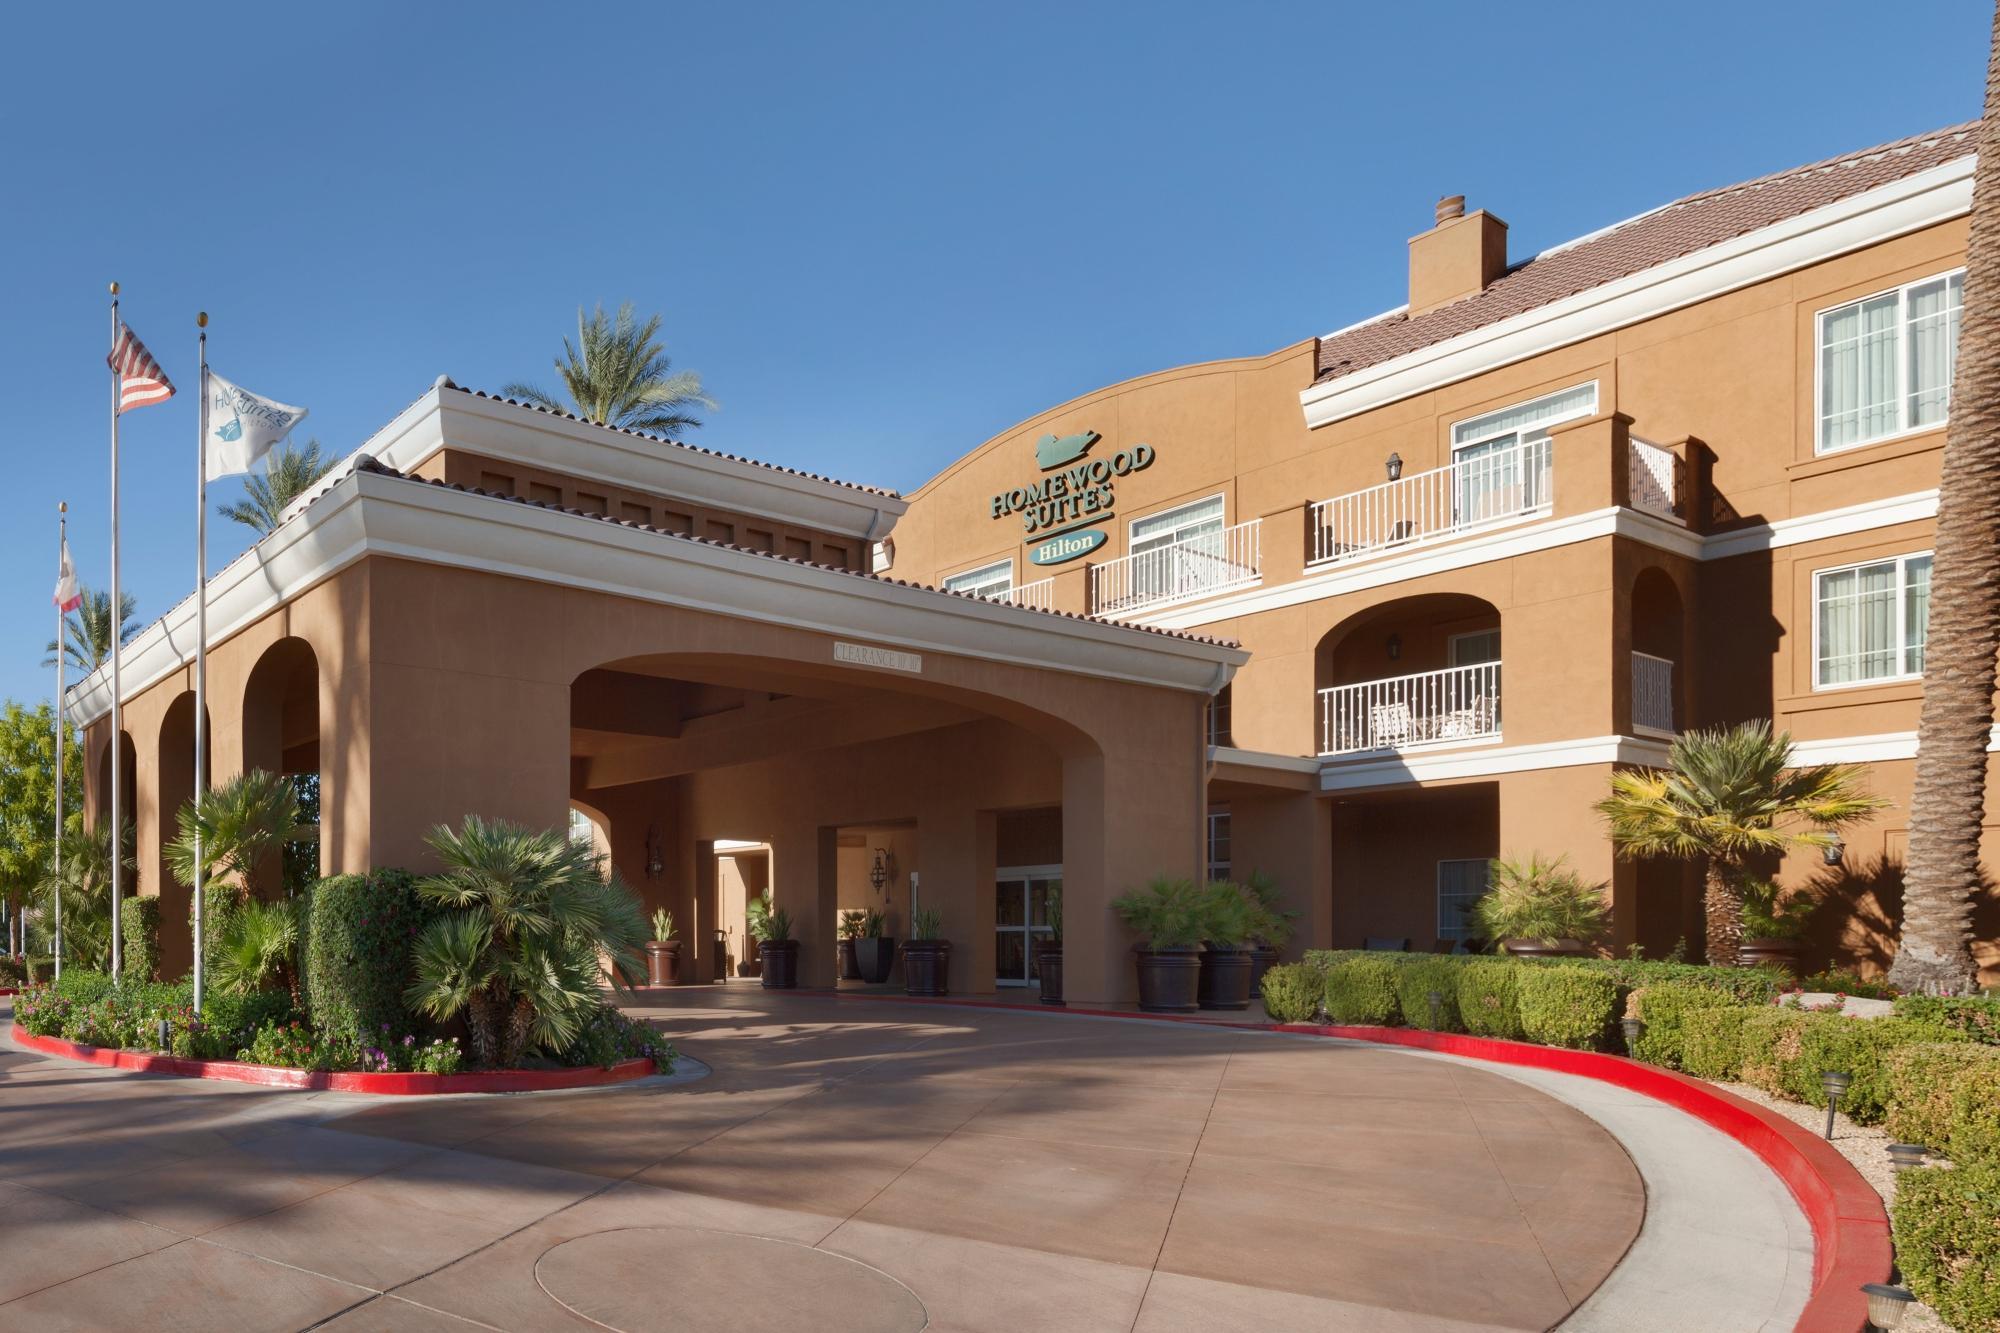 Photo of Homewood Suites by Hilton La Quinta, La Quinta, CA